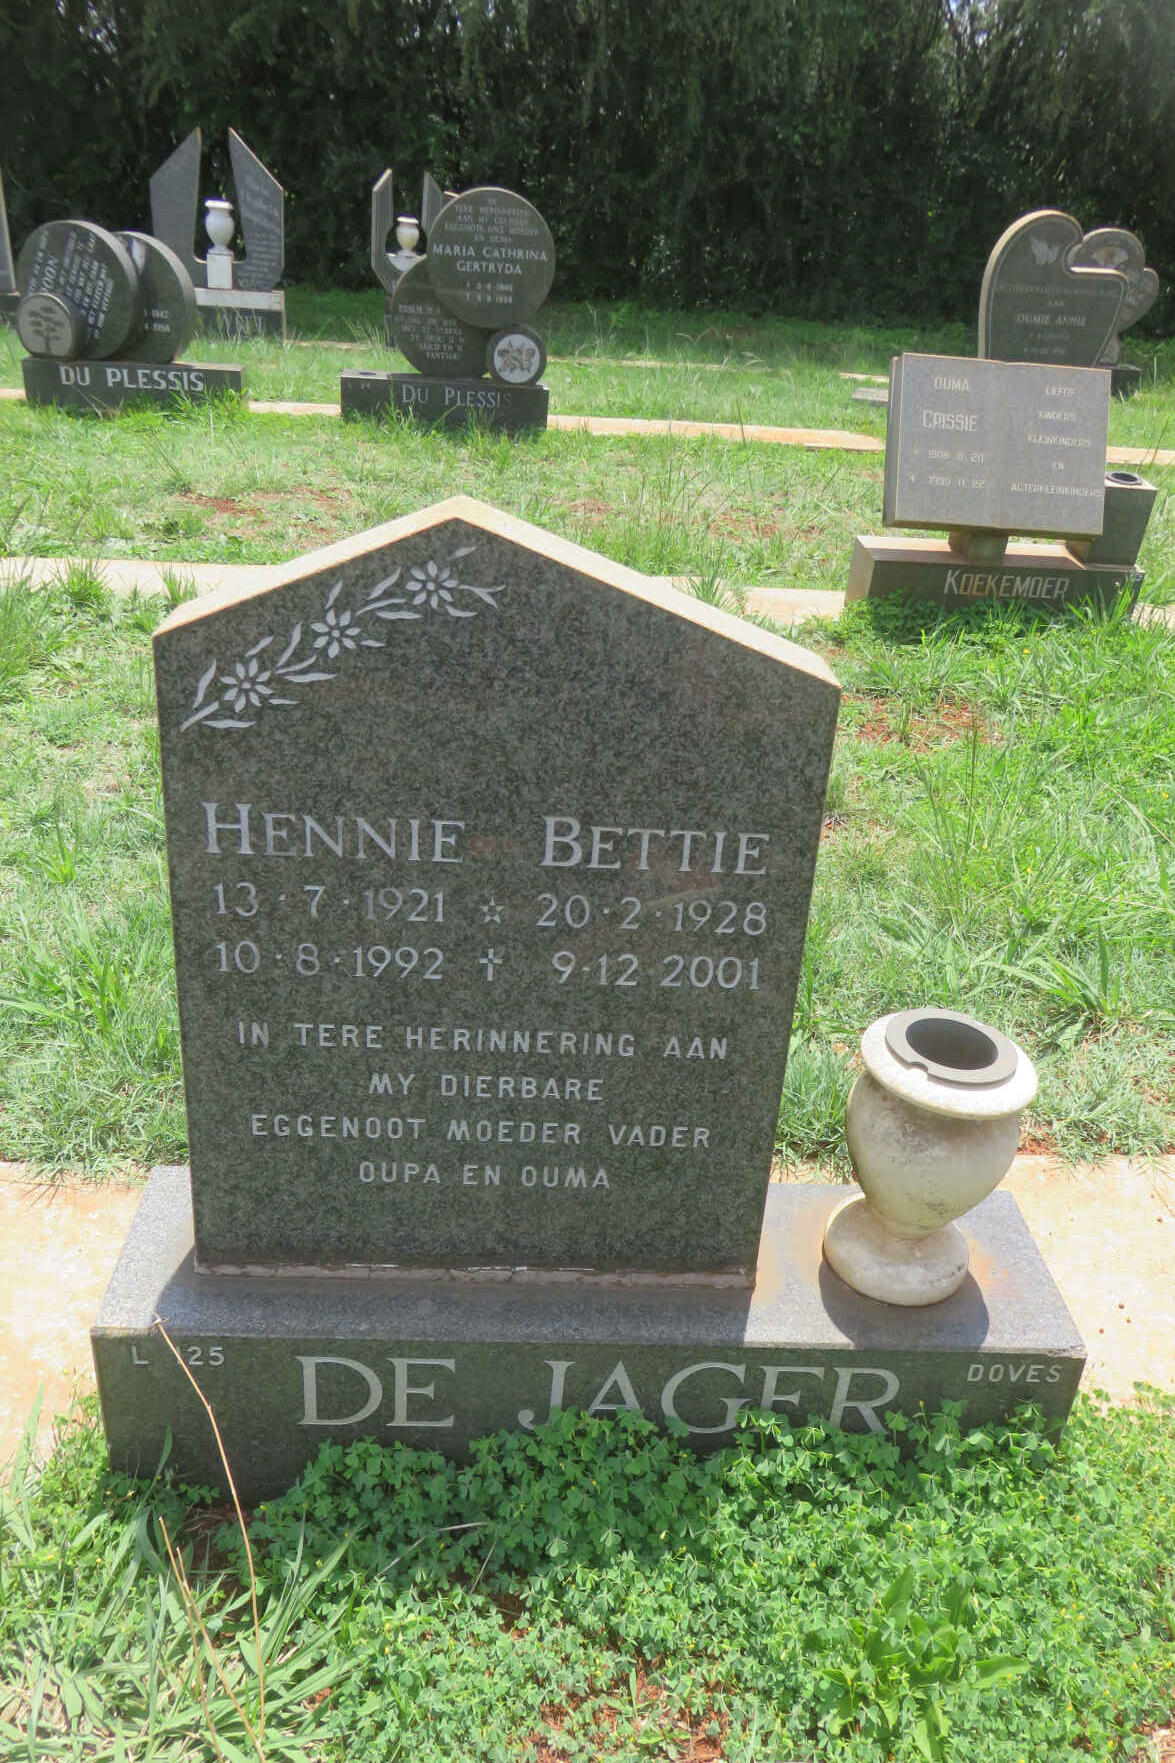 JAGER Hennie, de 1921-1992 & Bettie 1928-2001